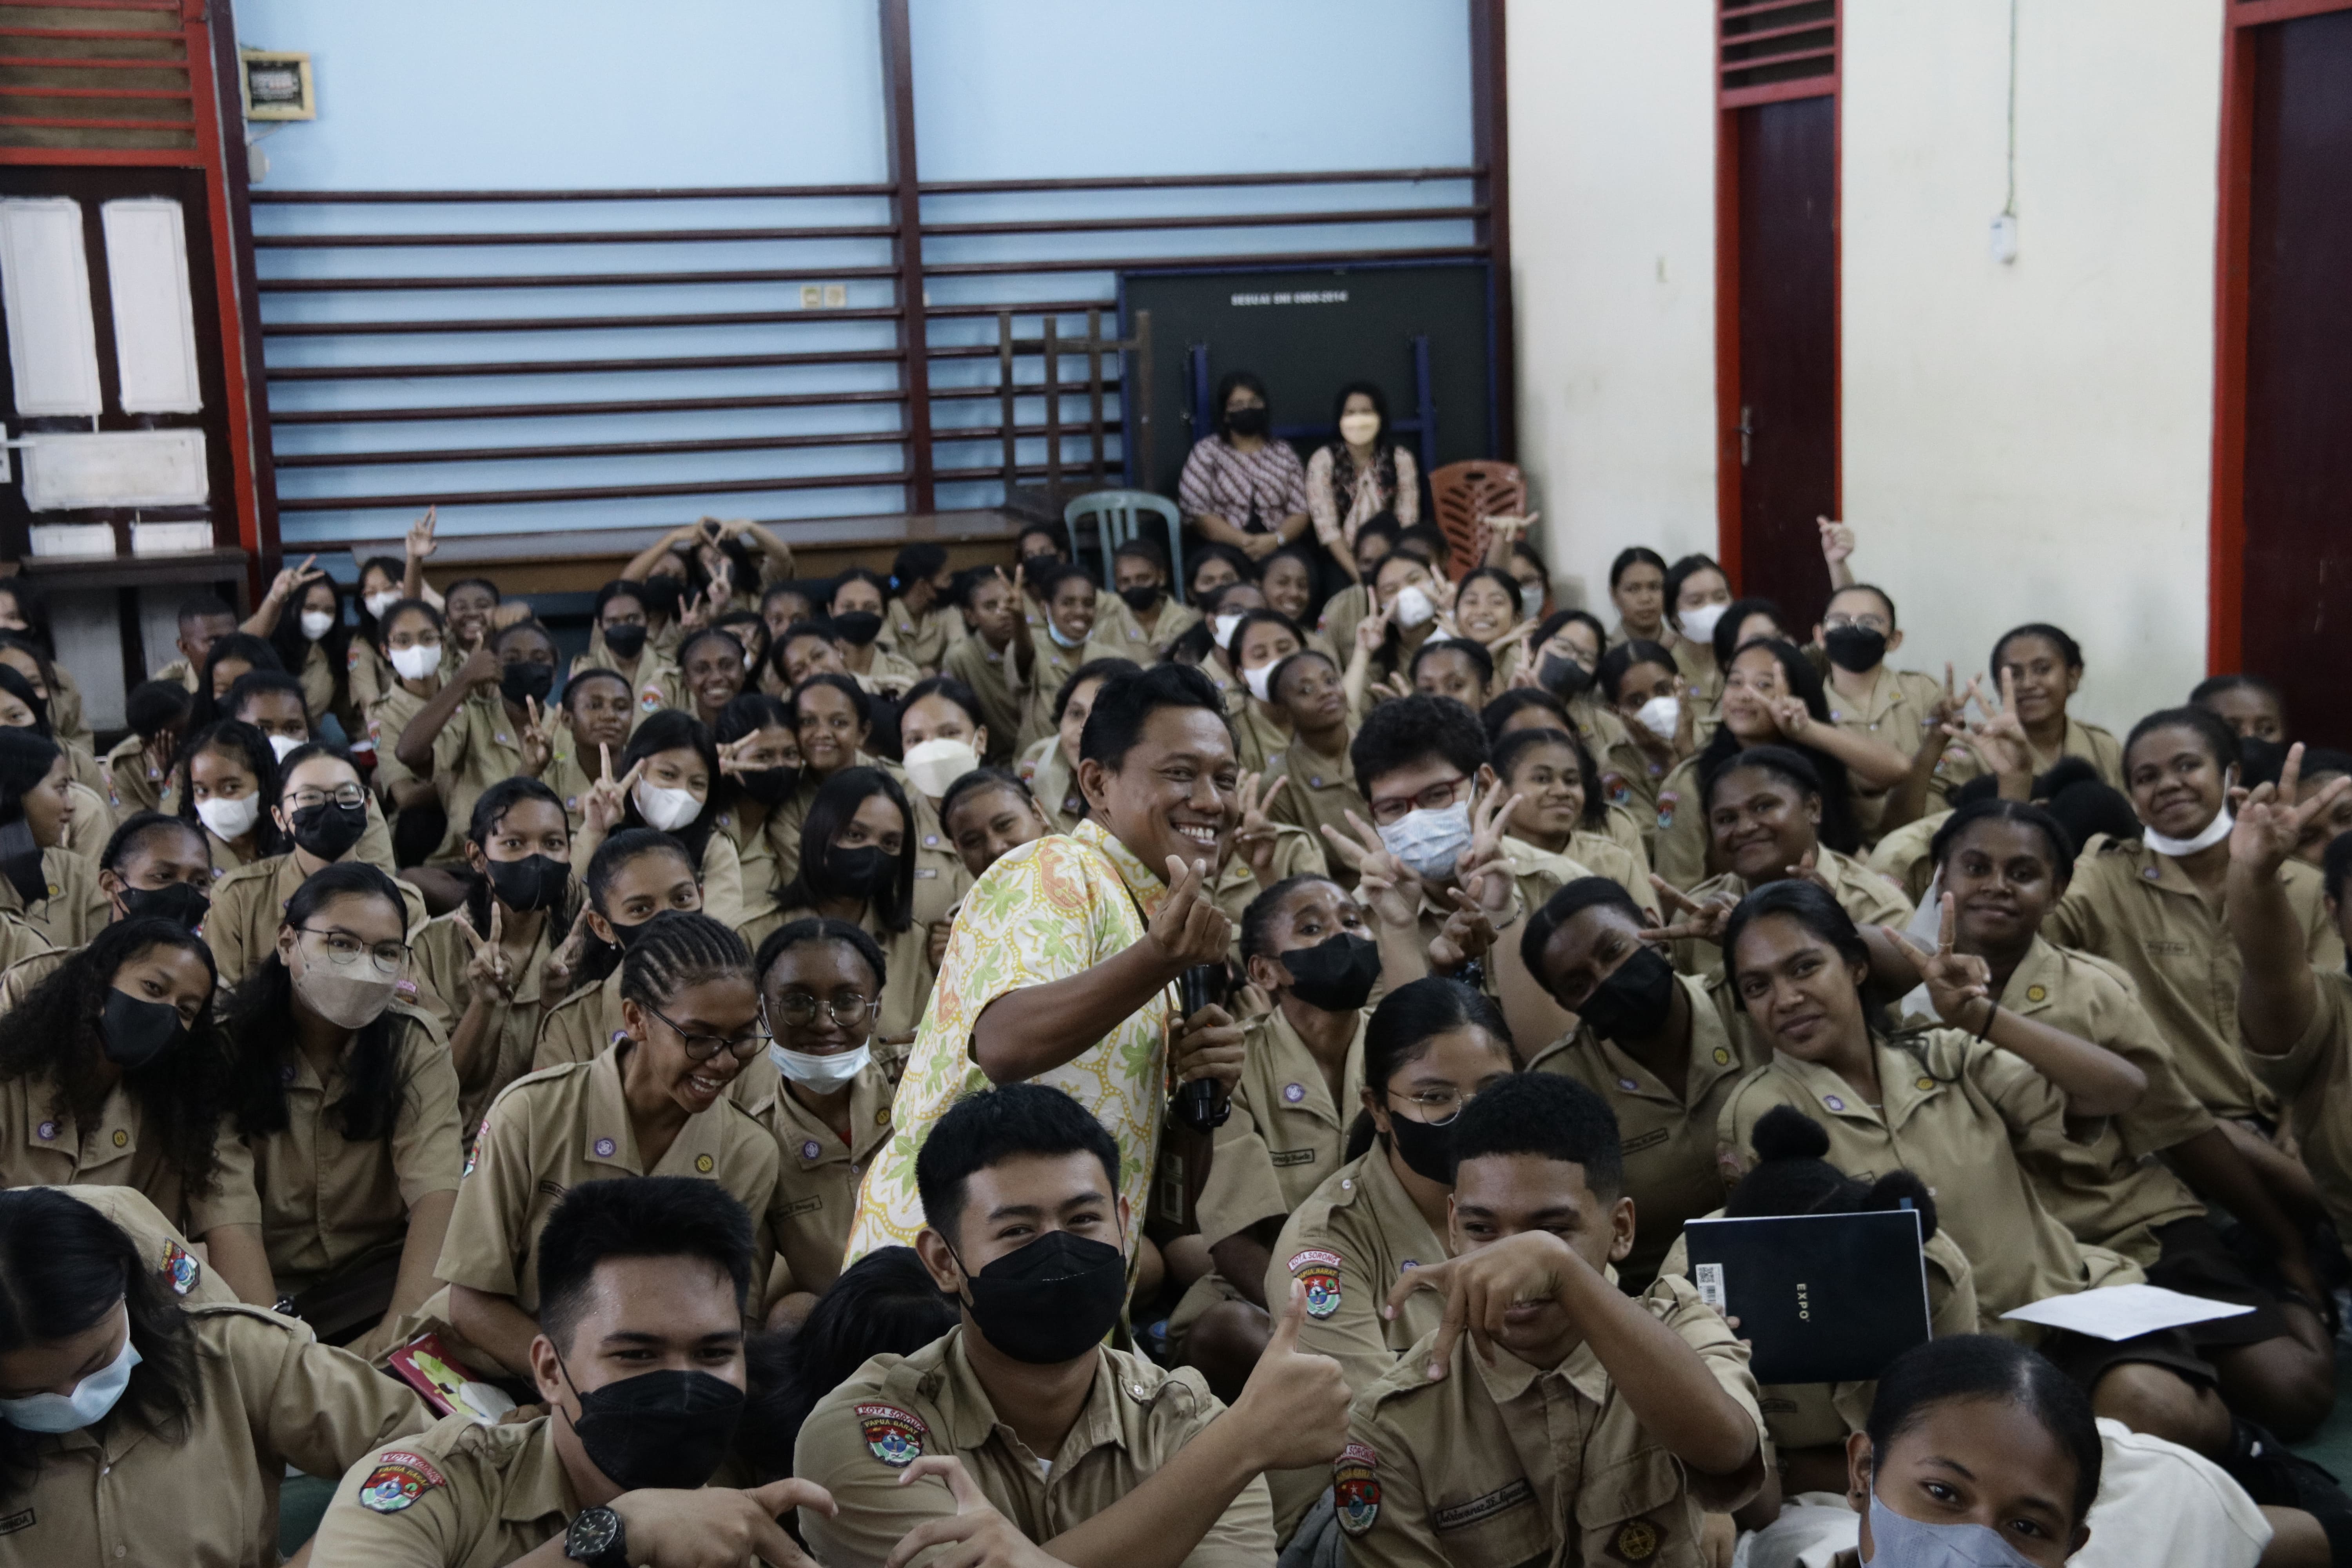 Keseruan Acara “KPKNL Sorong Goes to School 2022” di SMA YPPK Agustinus Kota Sorong